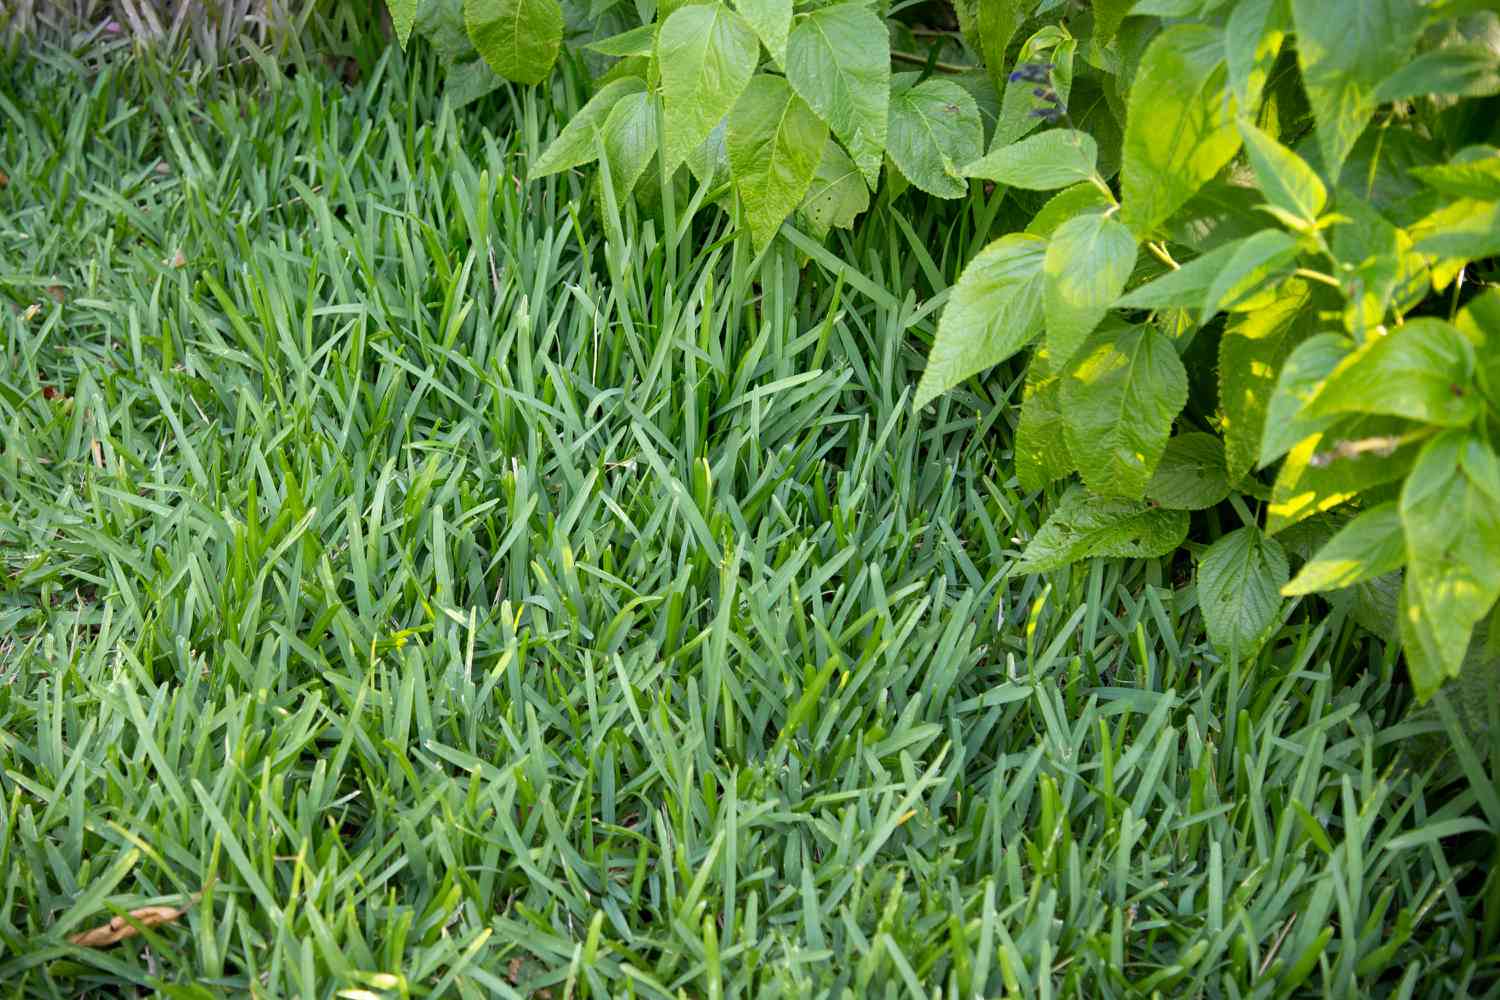 Benefits of Growing Centipede Grass